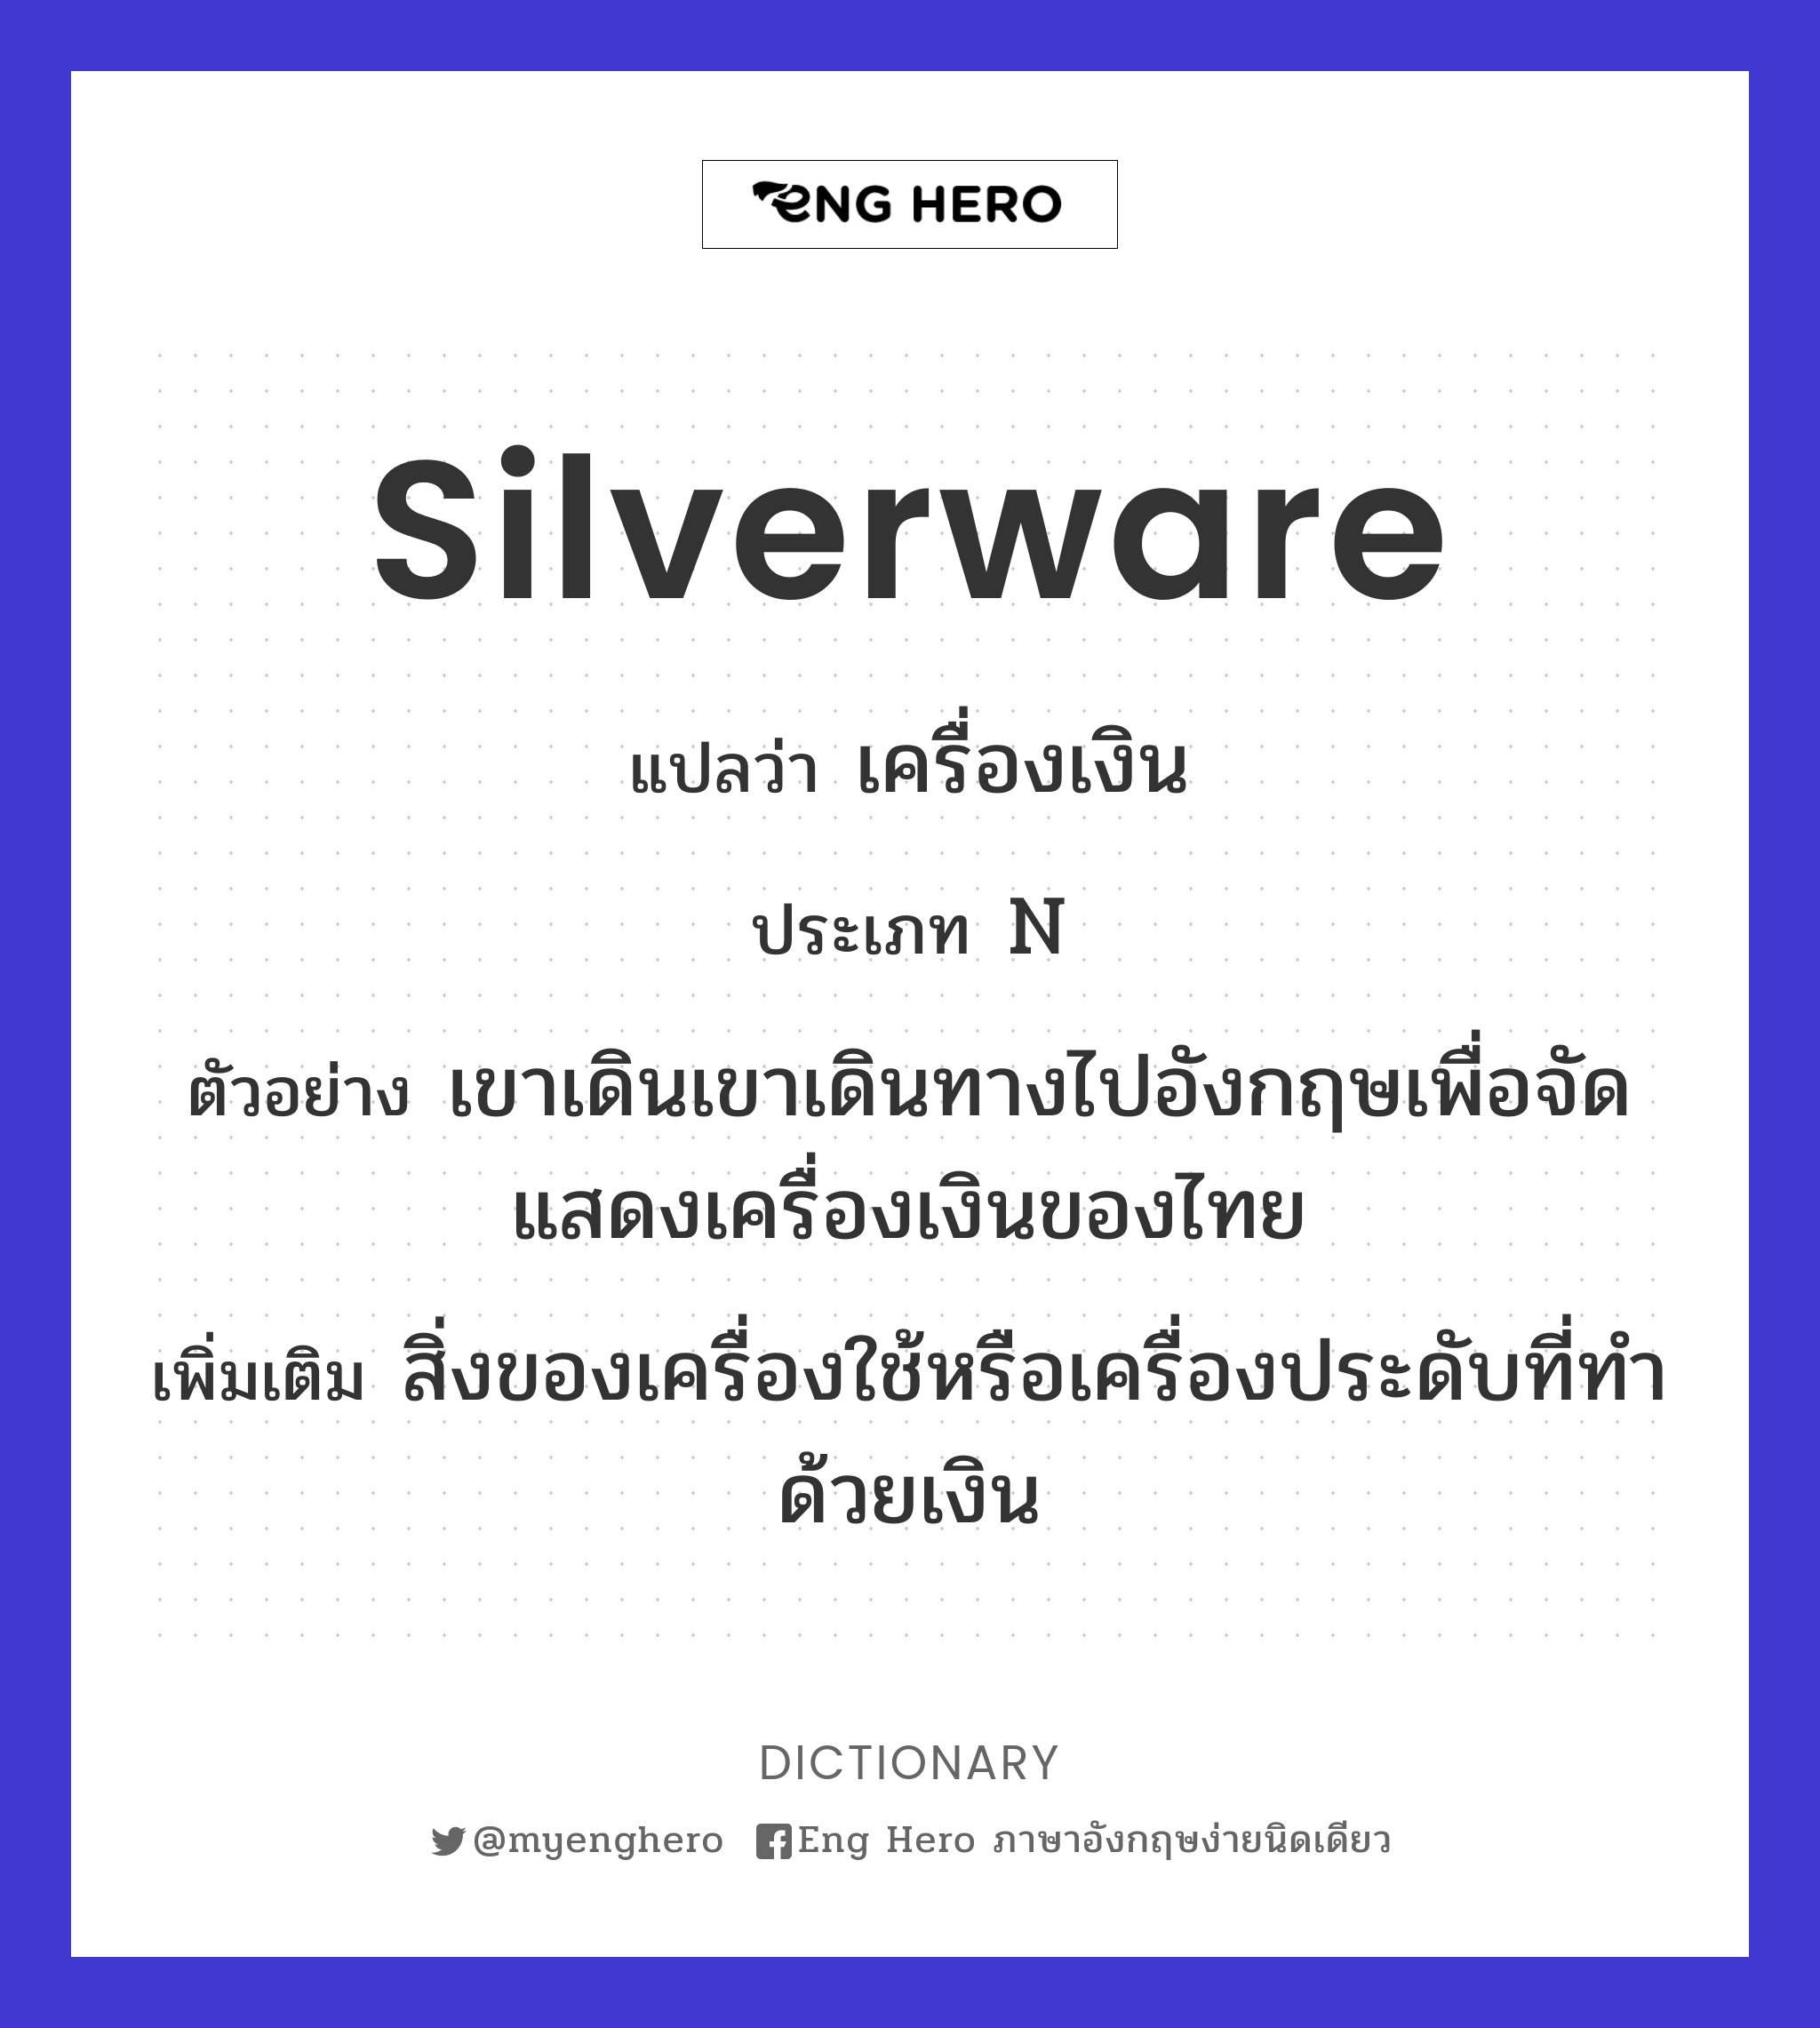 silverware